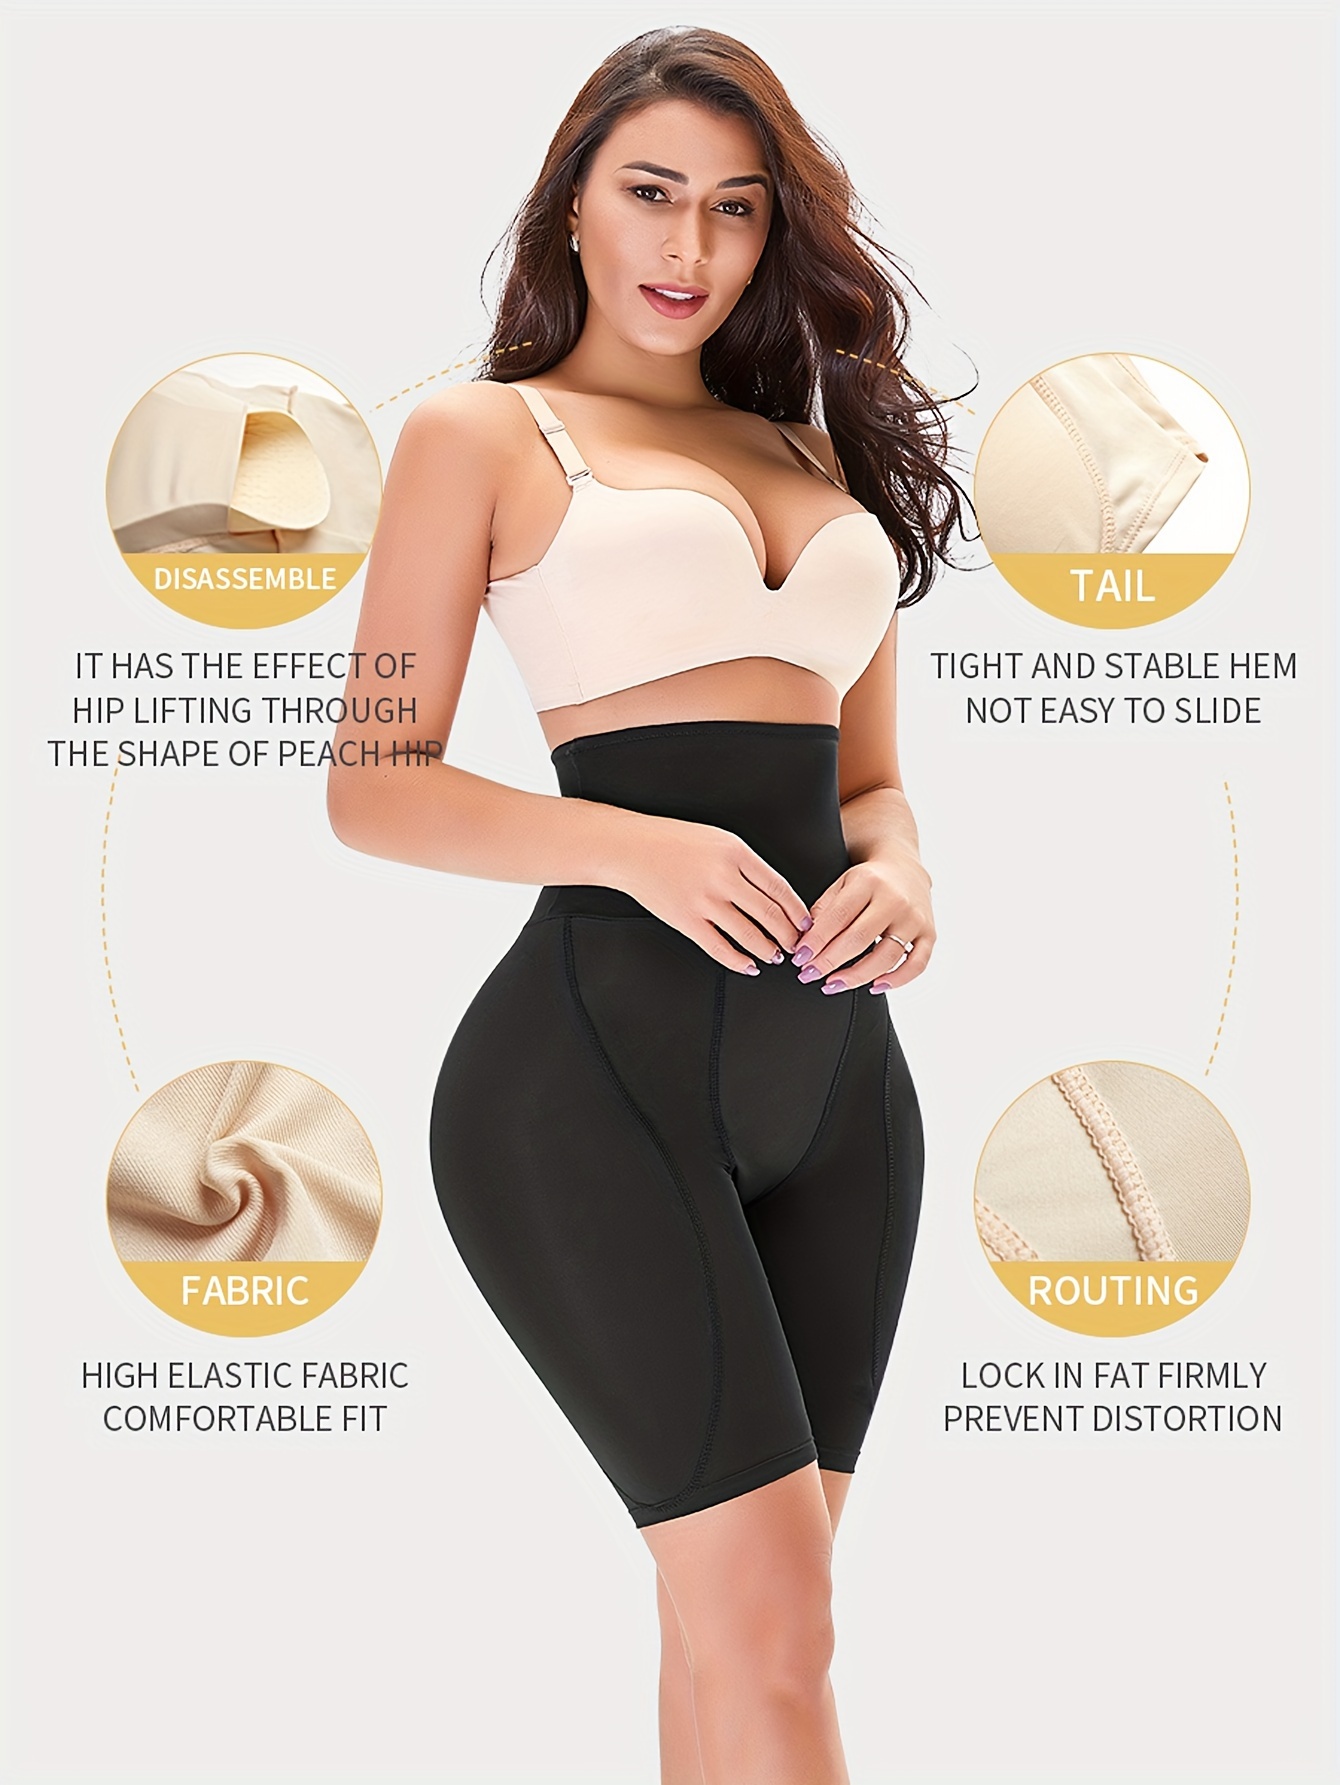 Ultra Slim Tummy Control Hip Lift Panties,High Waist Shapewear